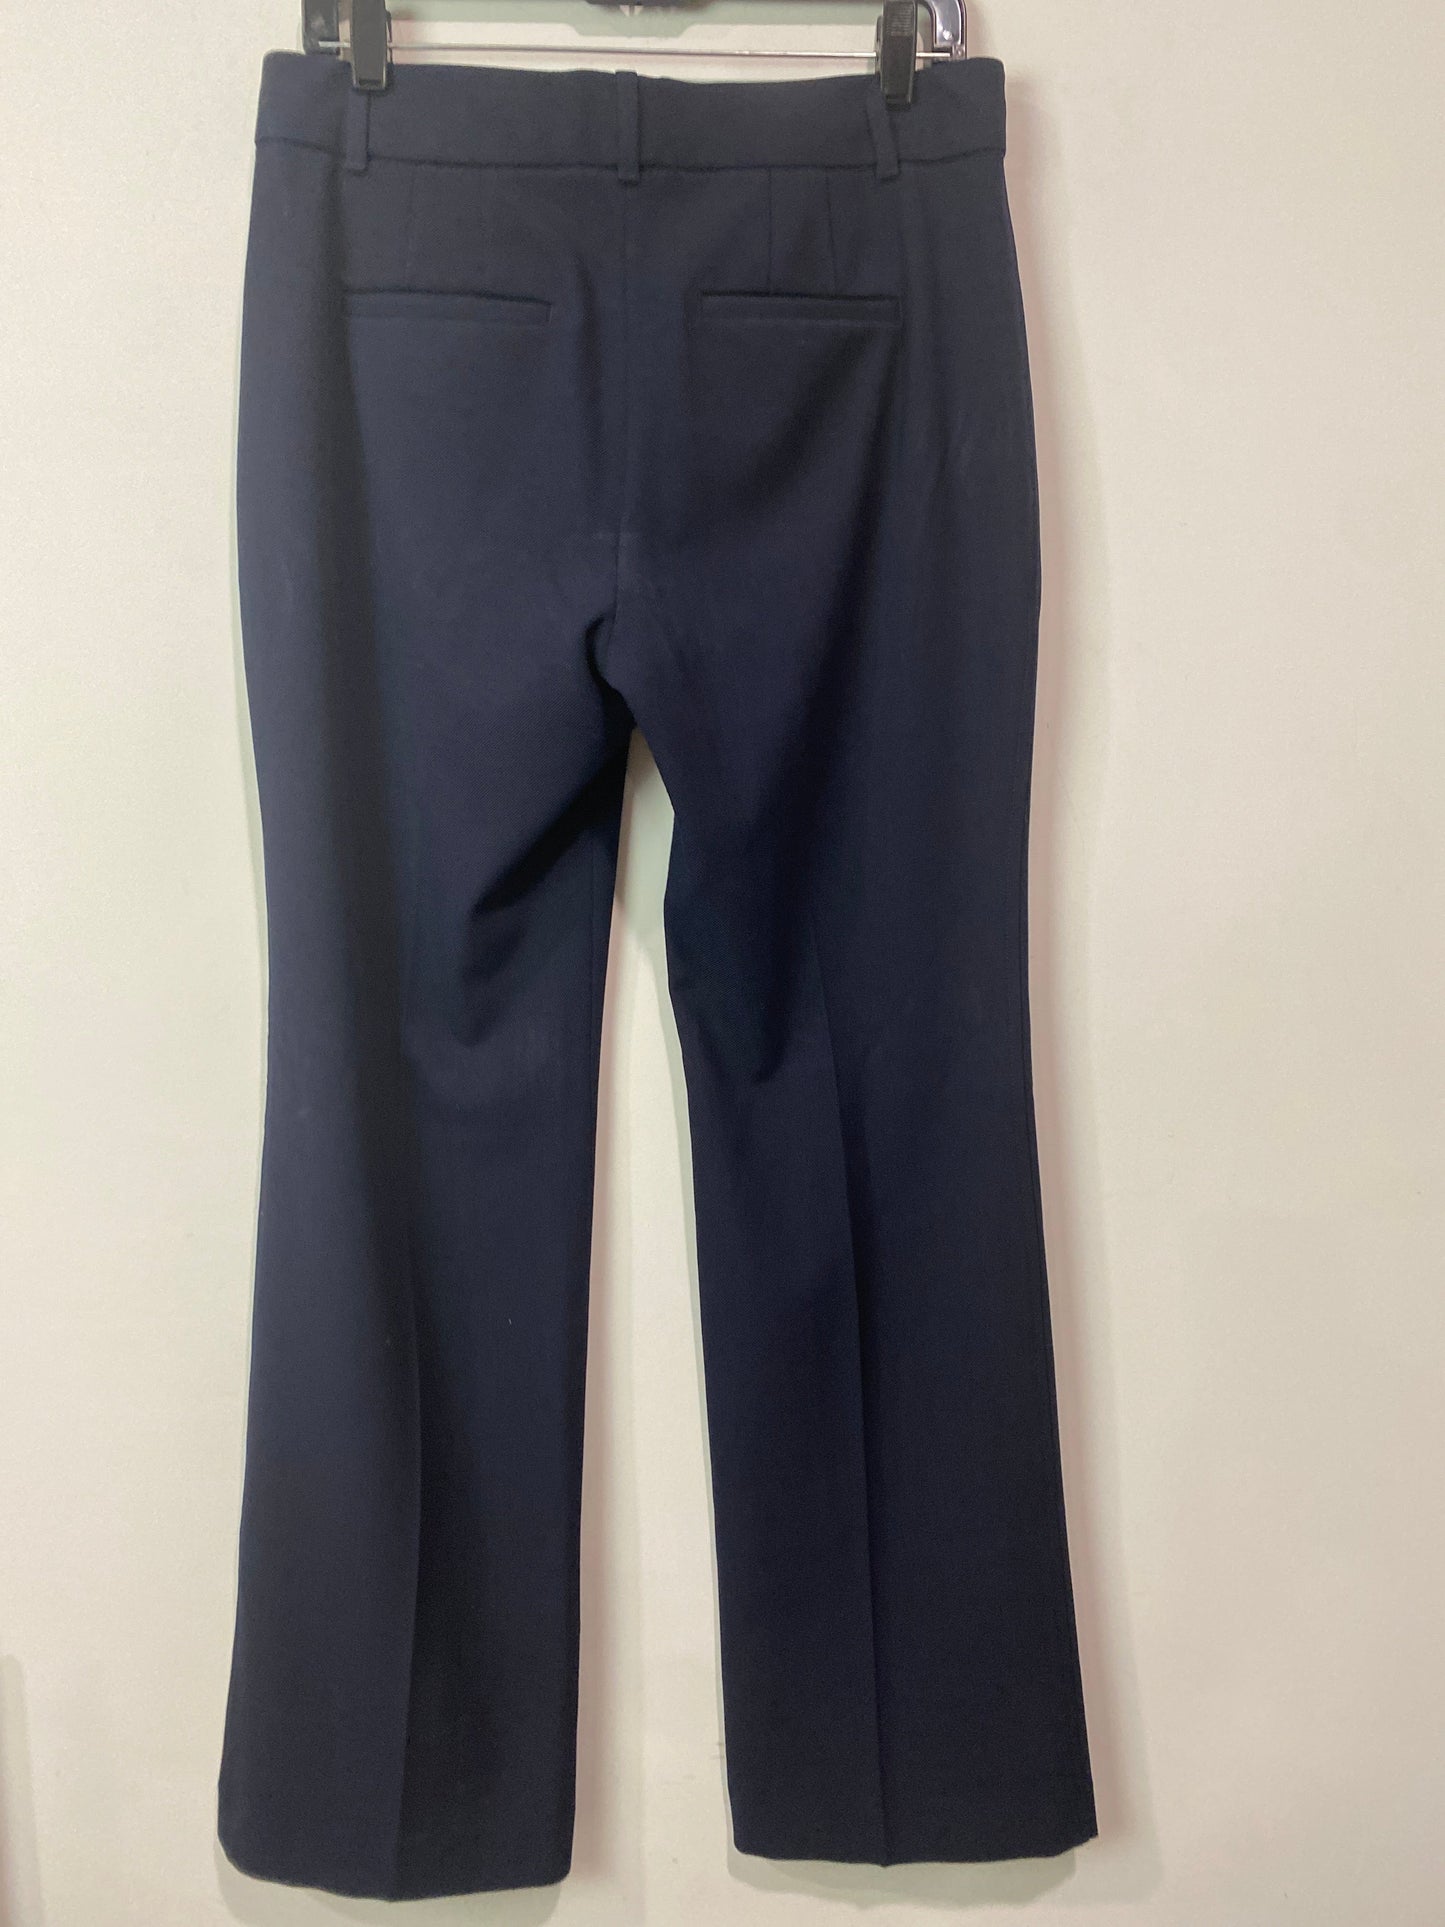 Navy Pants Dress Gap, Size 10